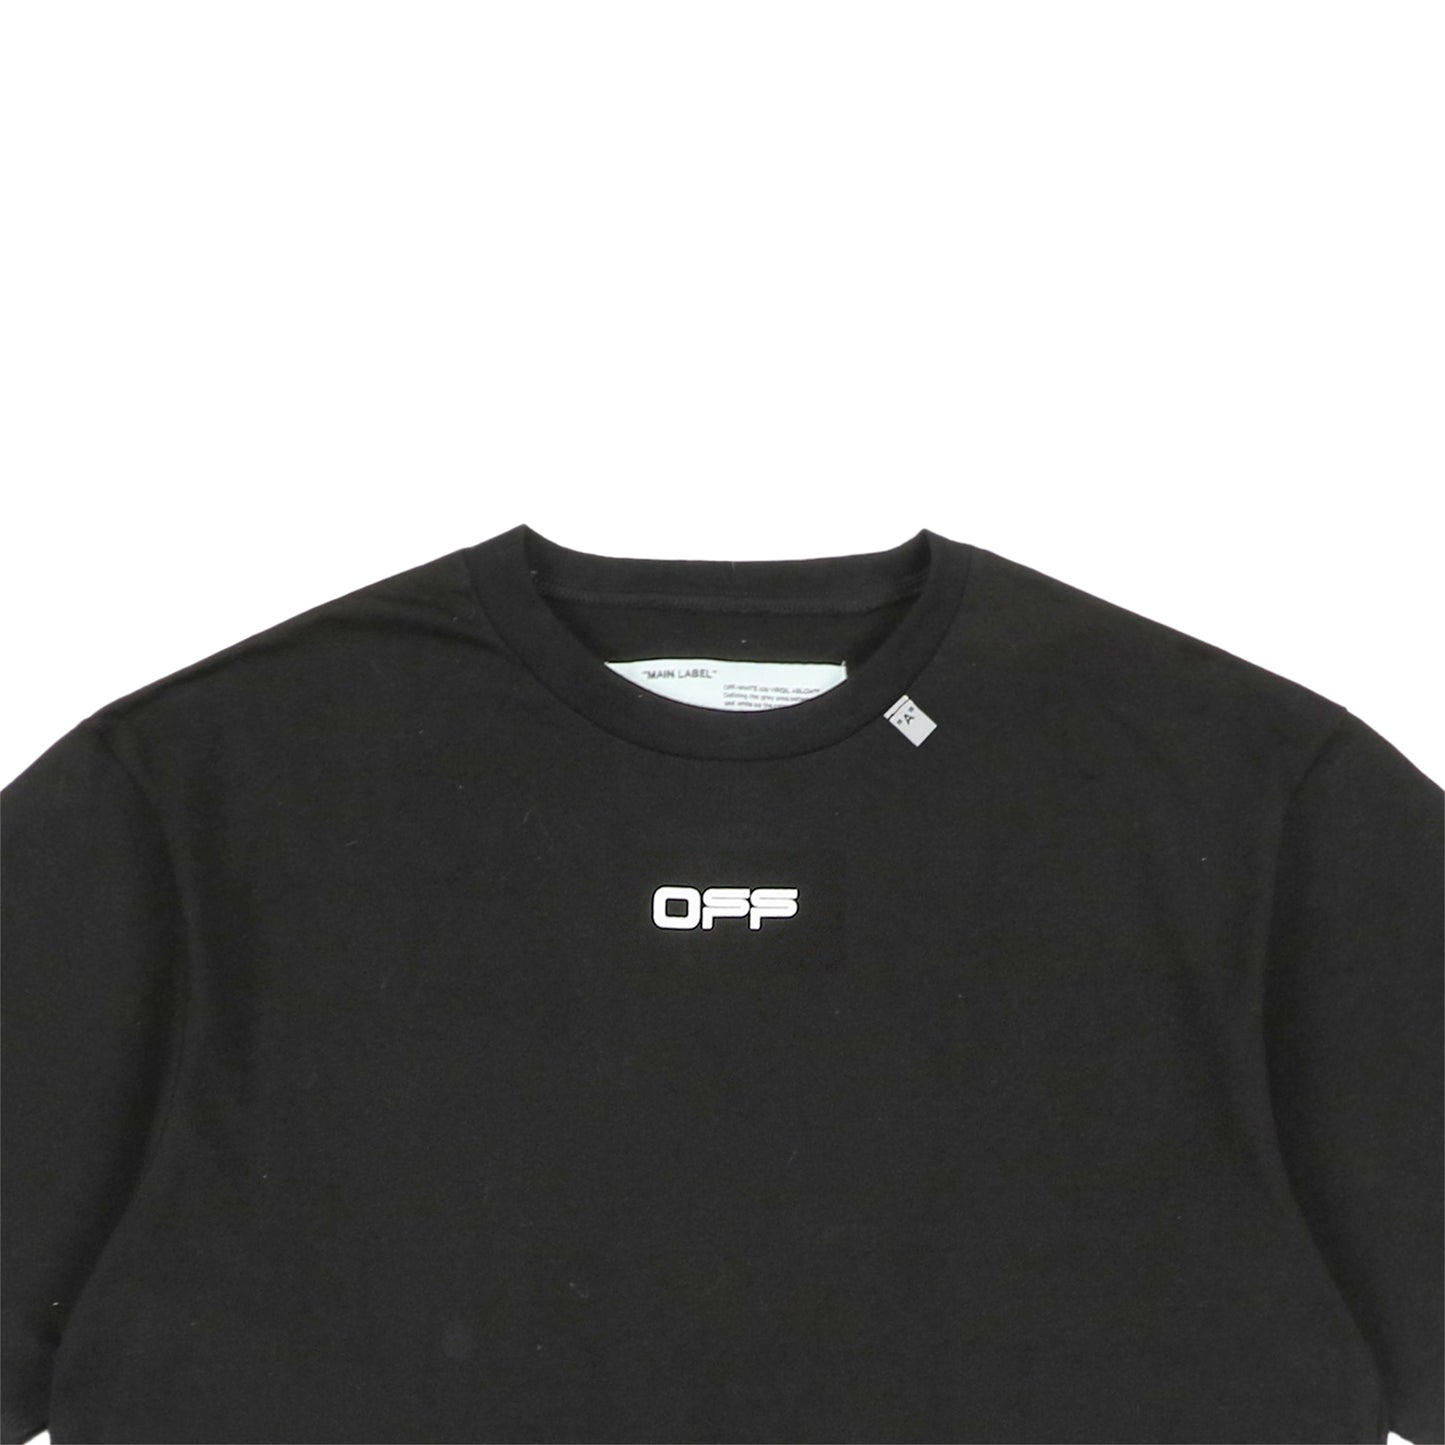 OW Black T-Shirt 9